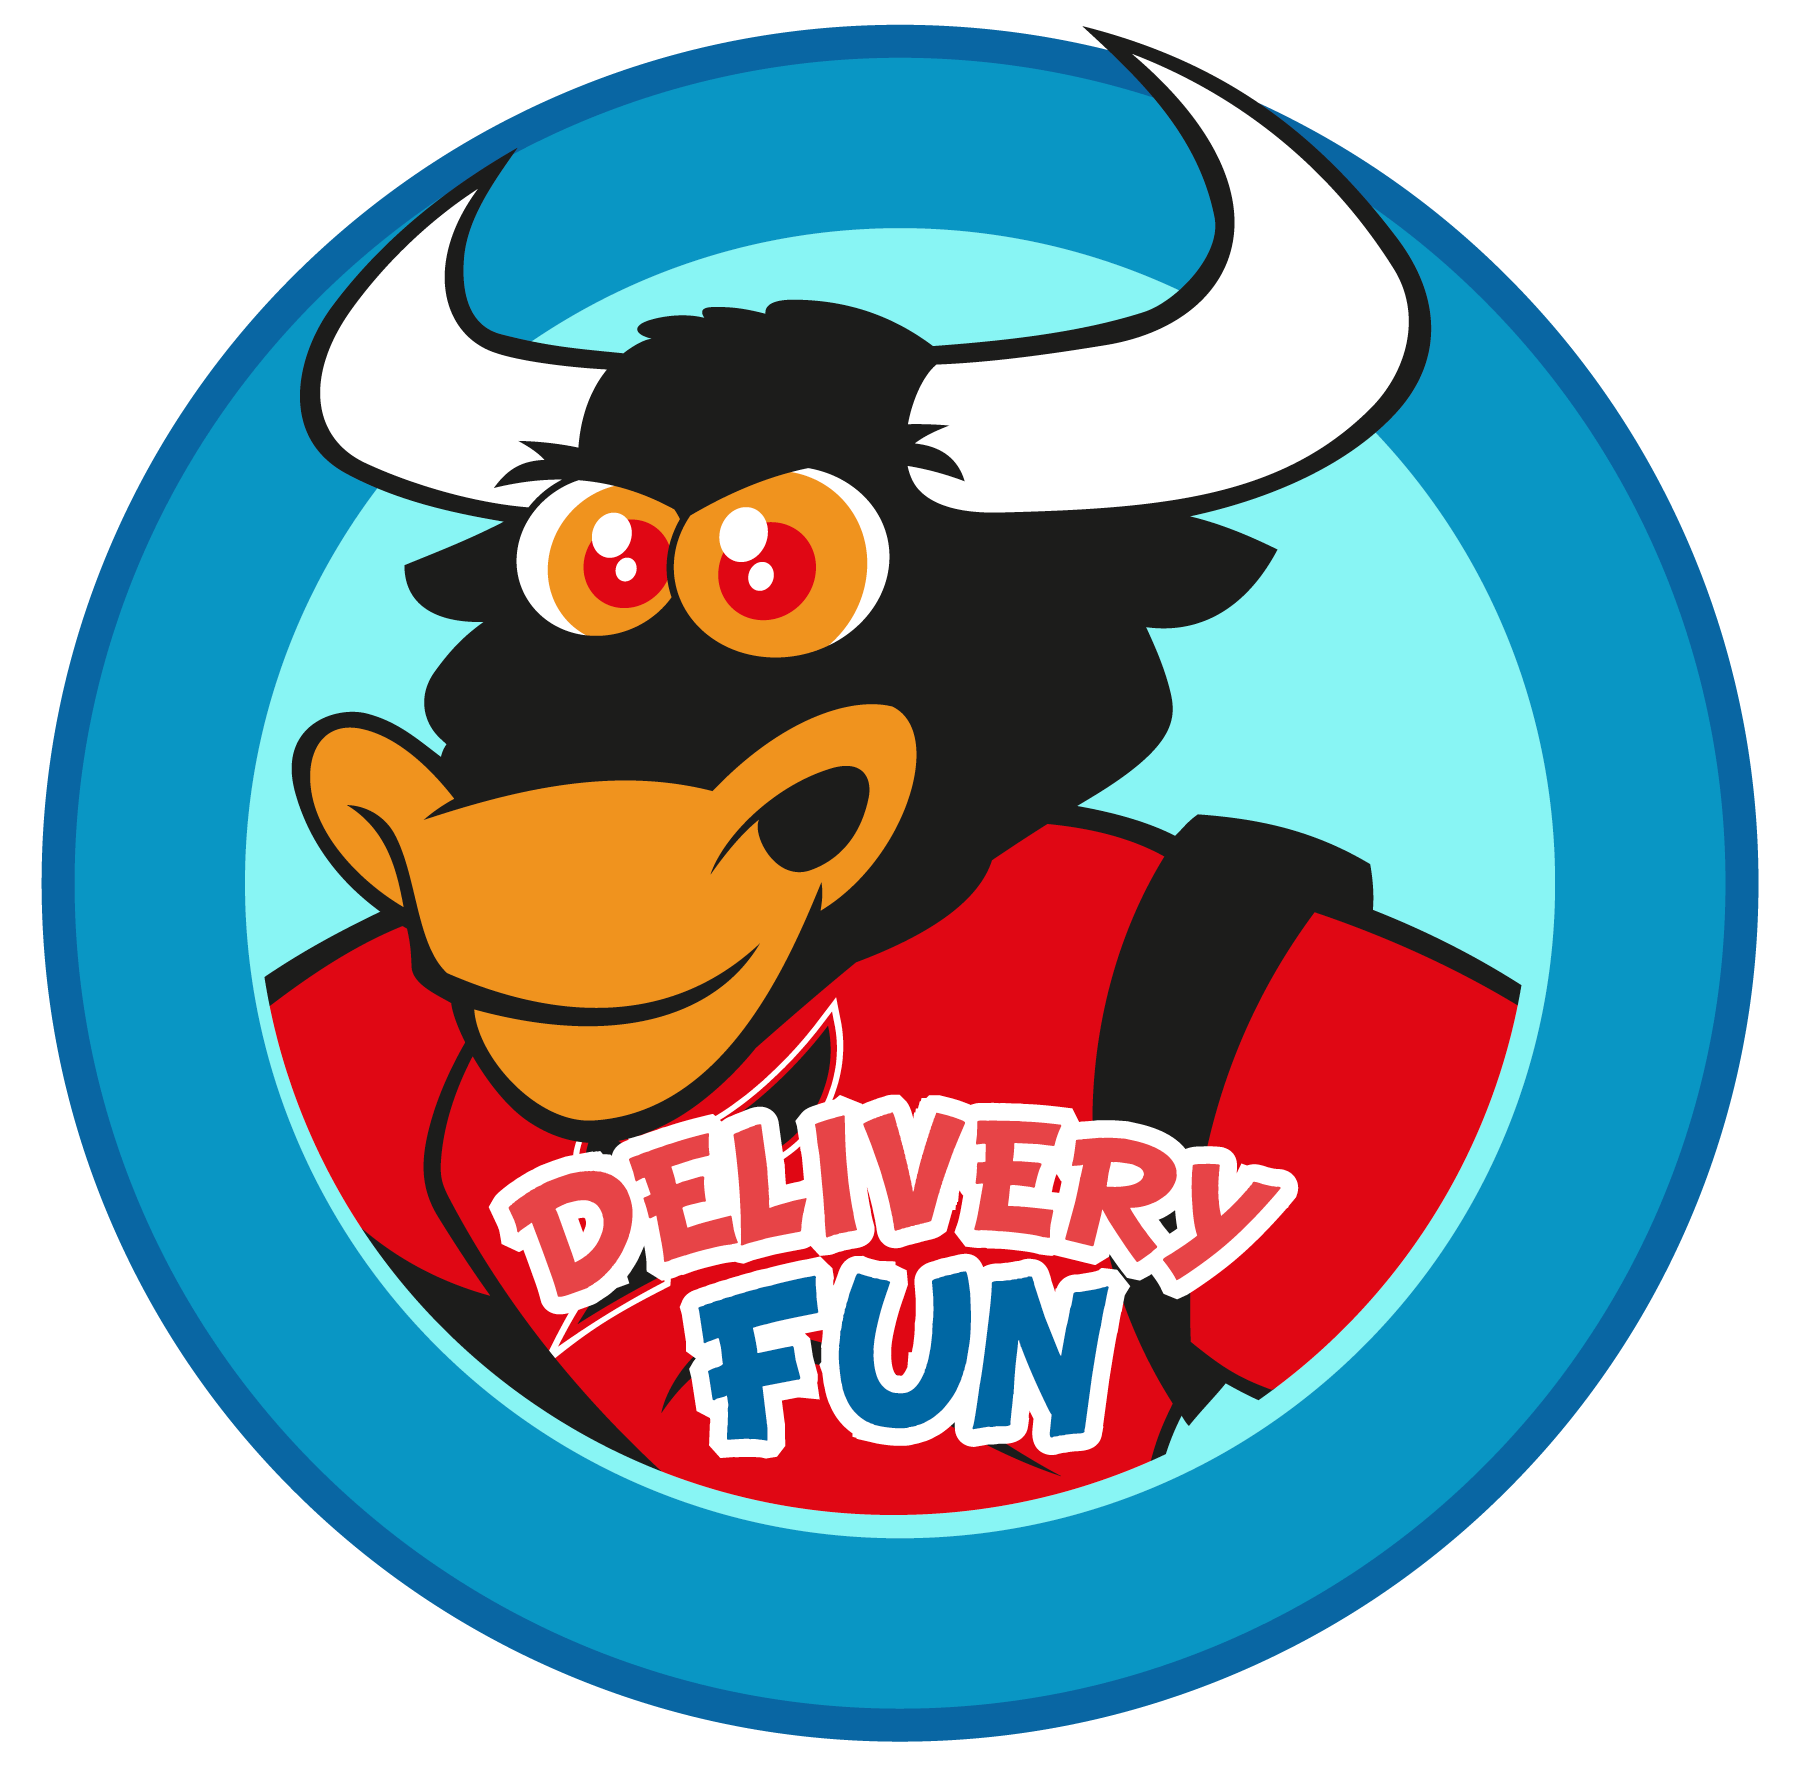 Delivery Fun